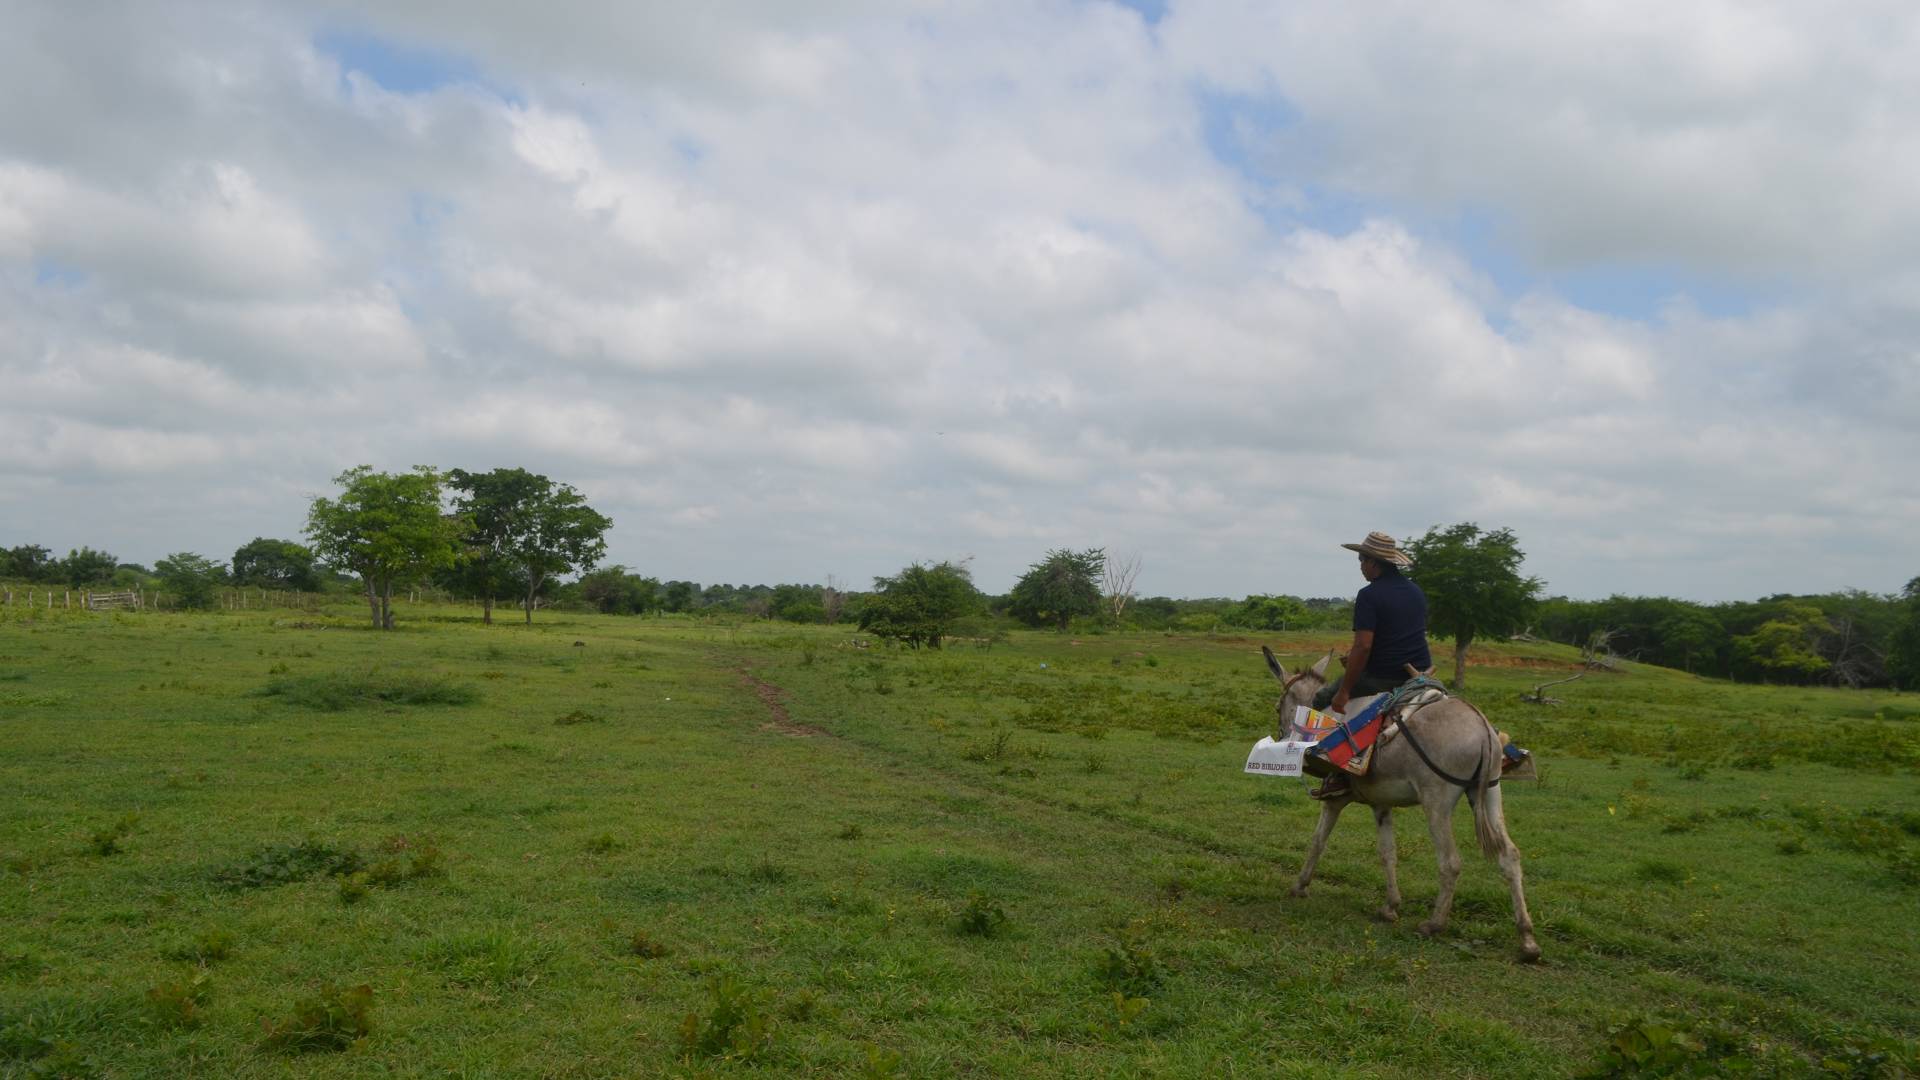 Man riding burro across field